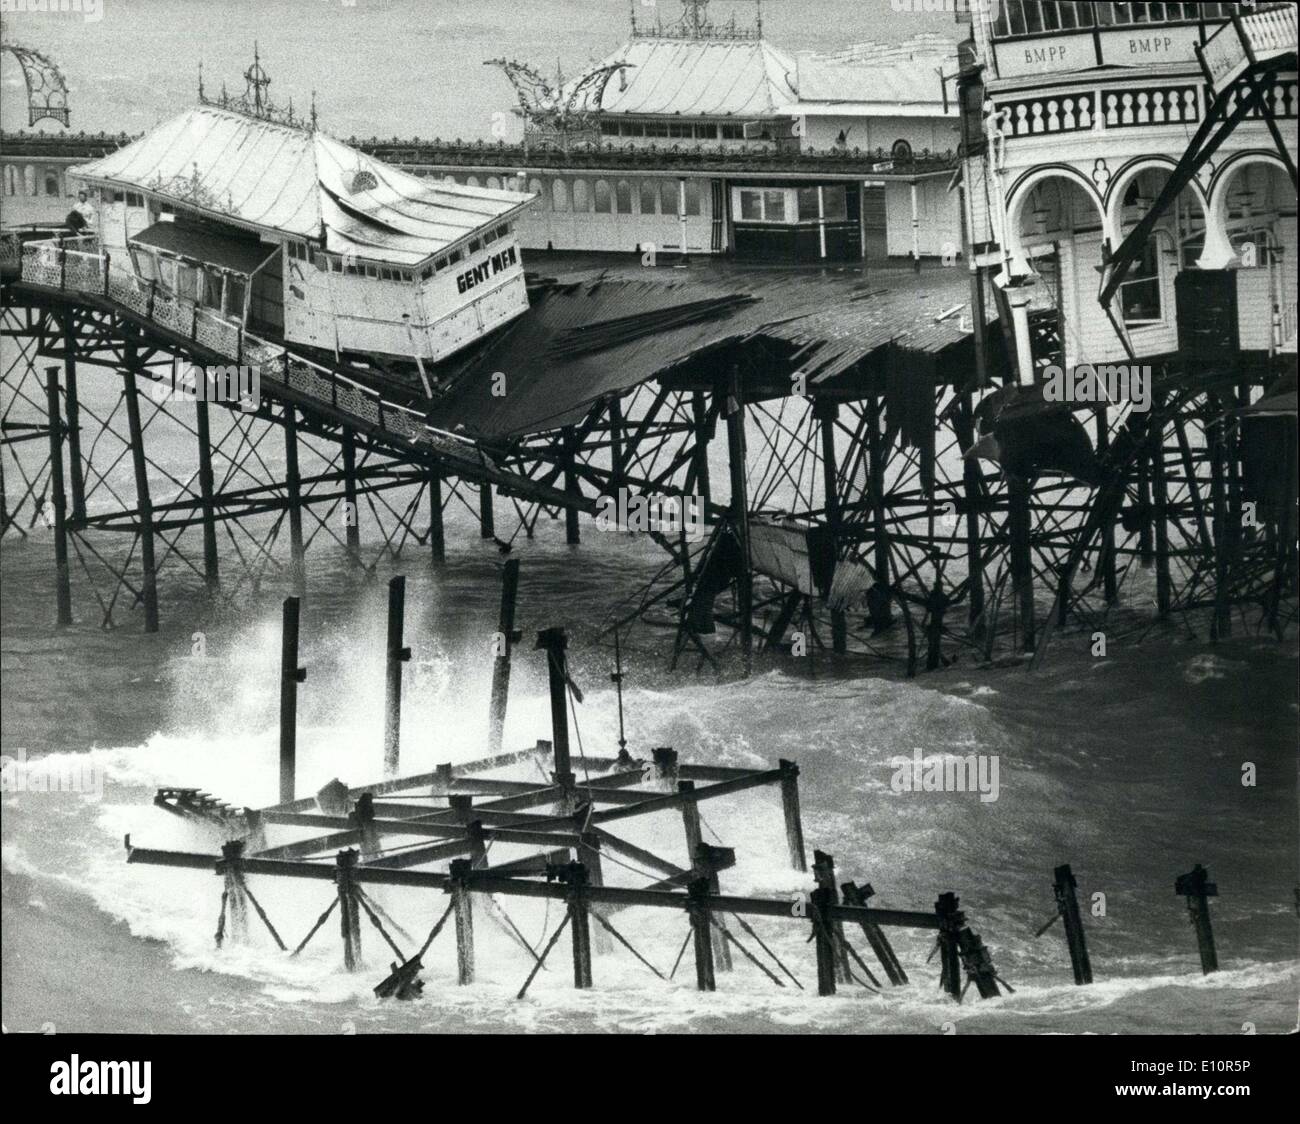 The pier falls